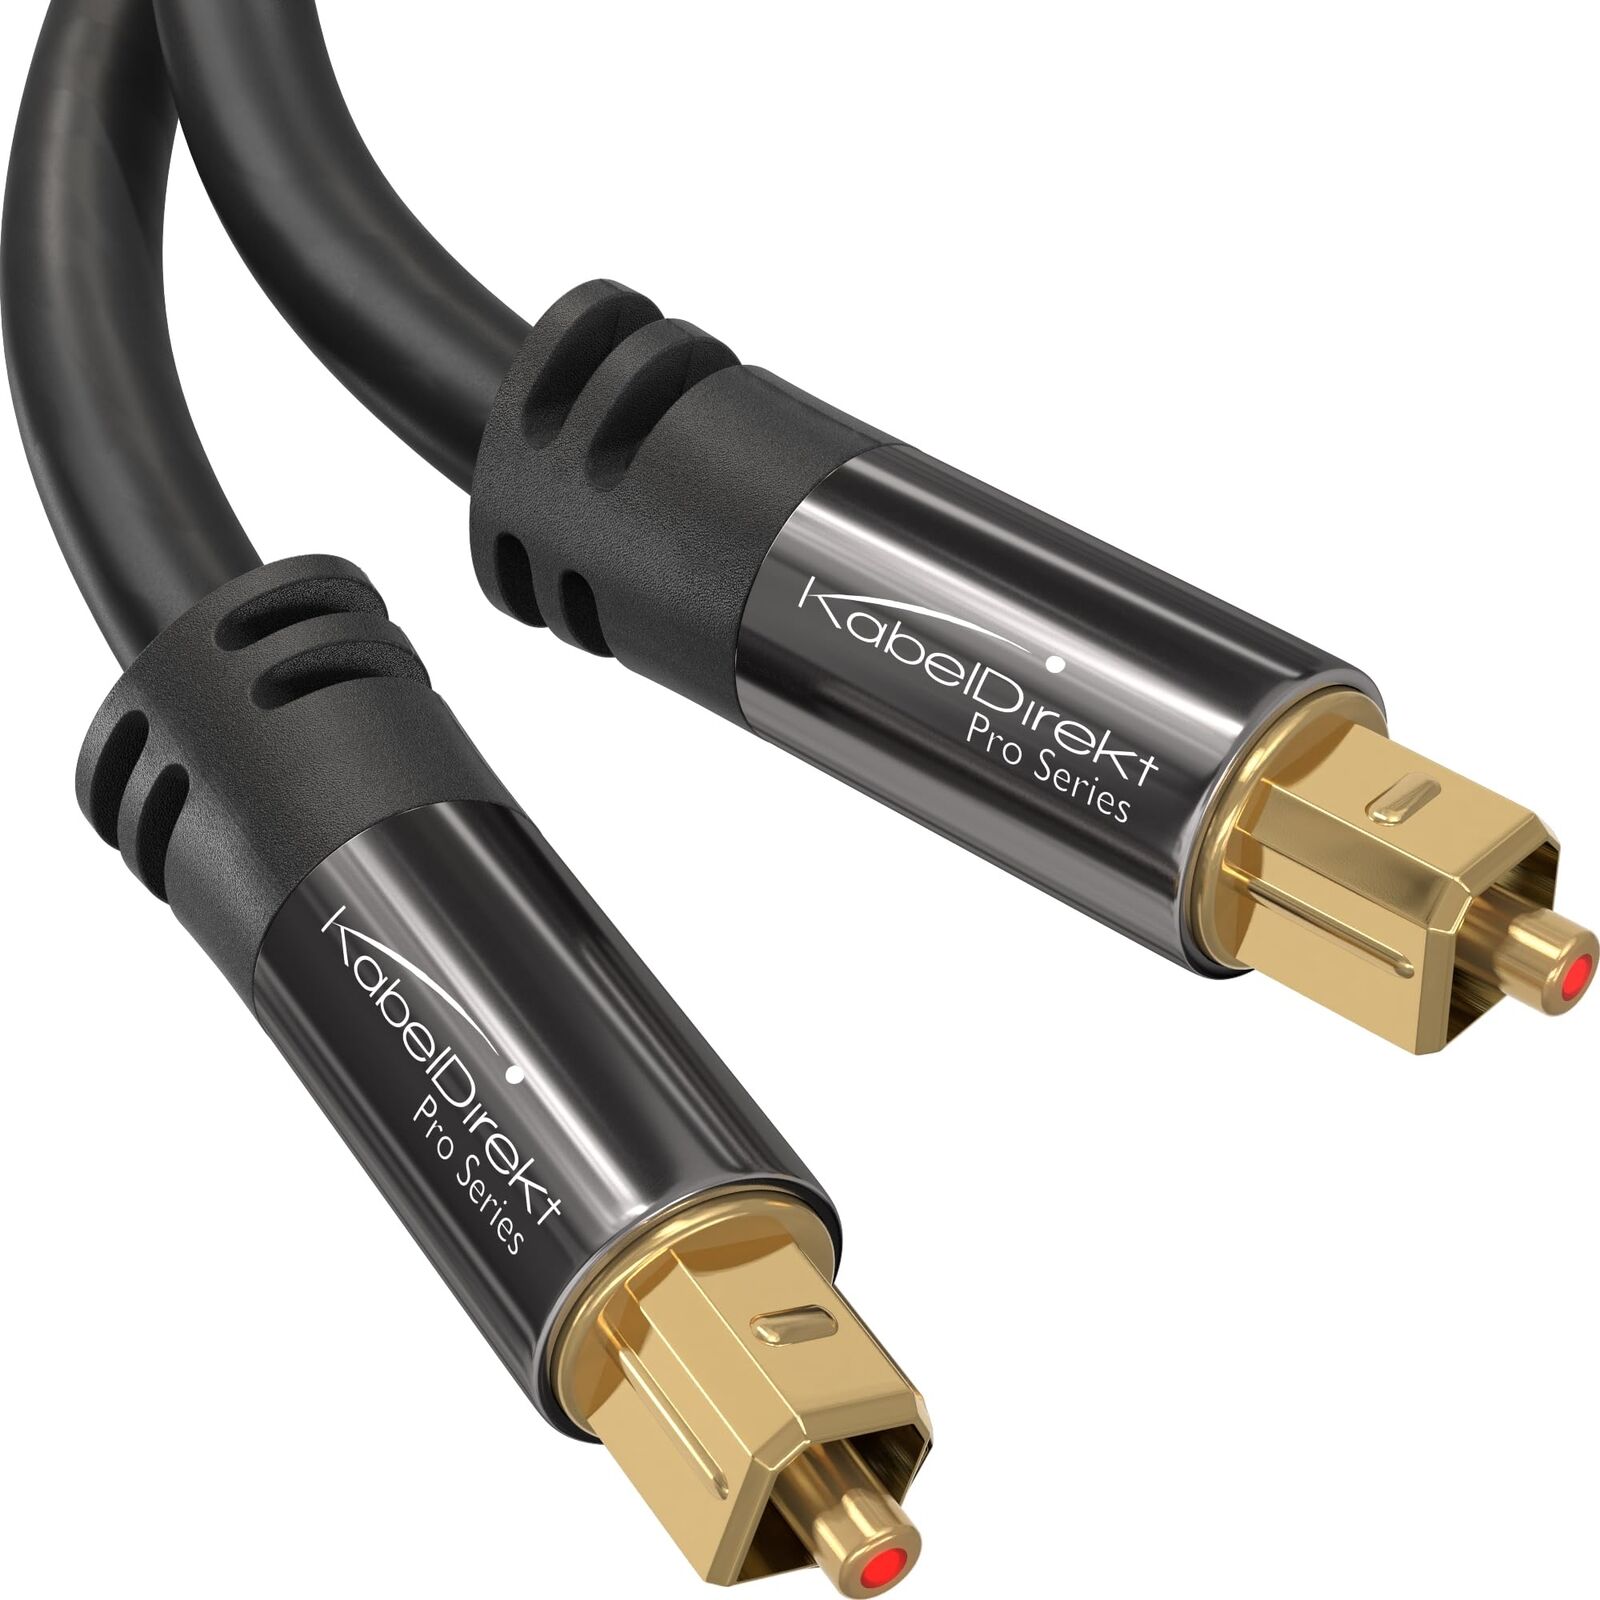 Optical Audio Cable - 10ft digital optical cable for soundbars, fiber optic c...